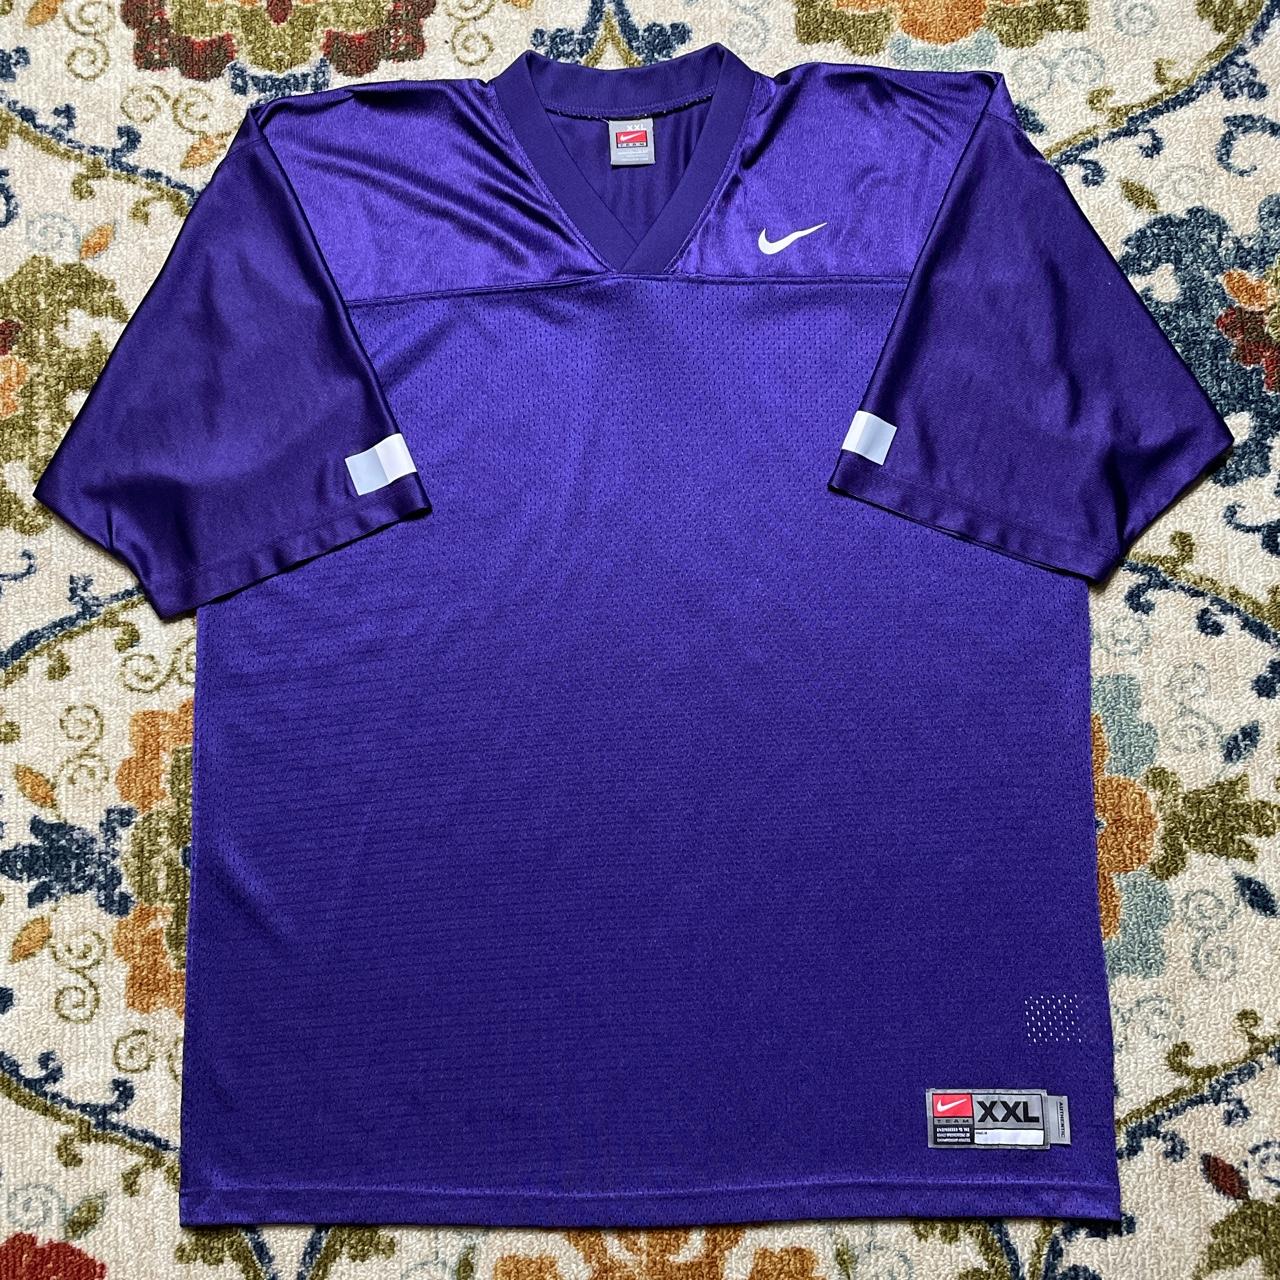 Vintage Nike team blank purple football jersey Sz... - Depop